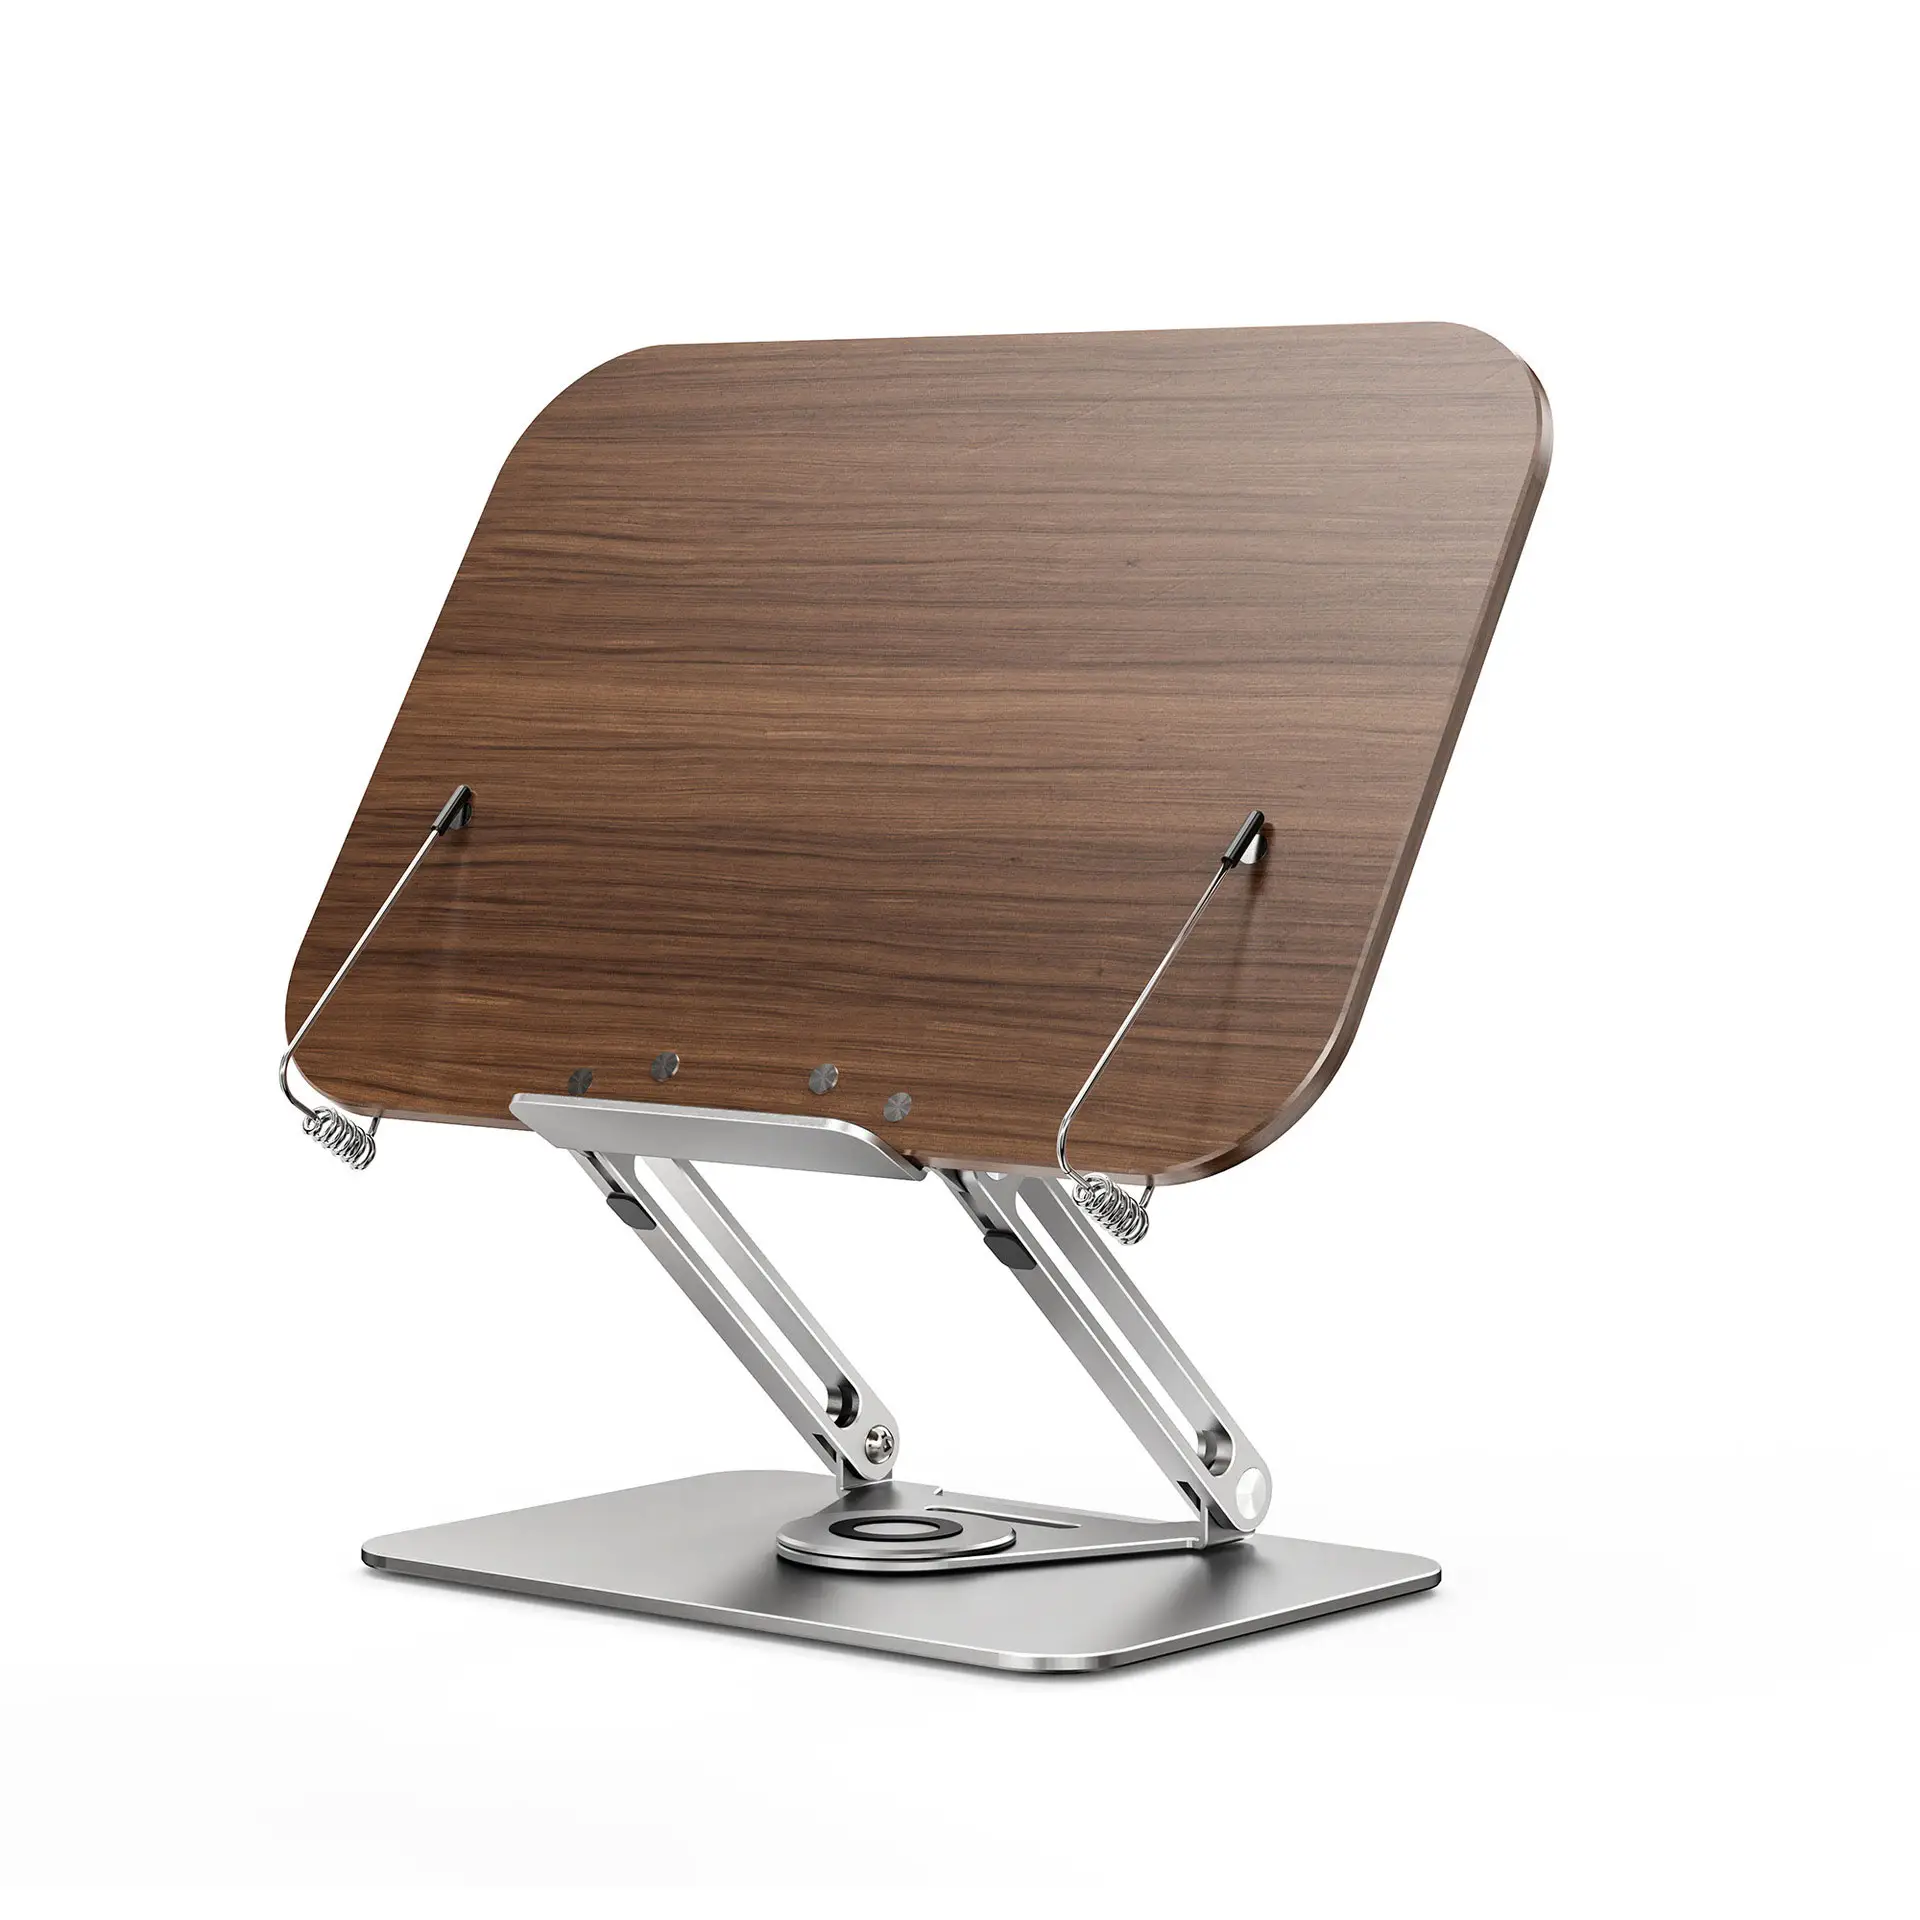 Jiesen Wholesales Wooden Made Adjustable Desk Table Laptop Tablet Stand Mount Bracket Reading Accessories